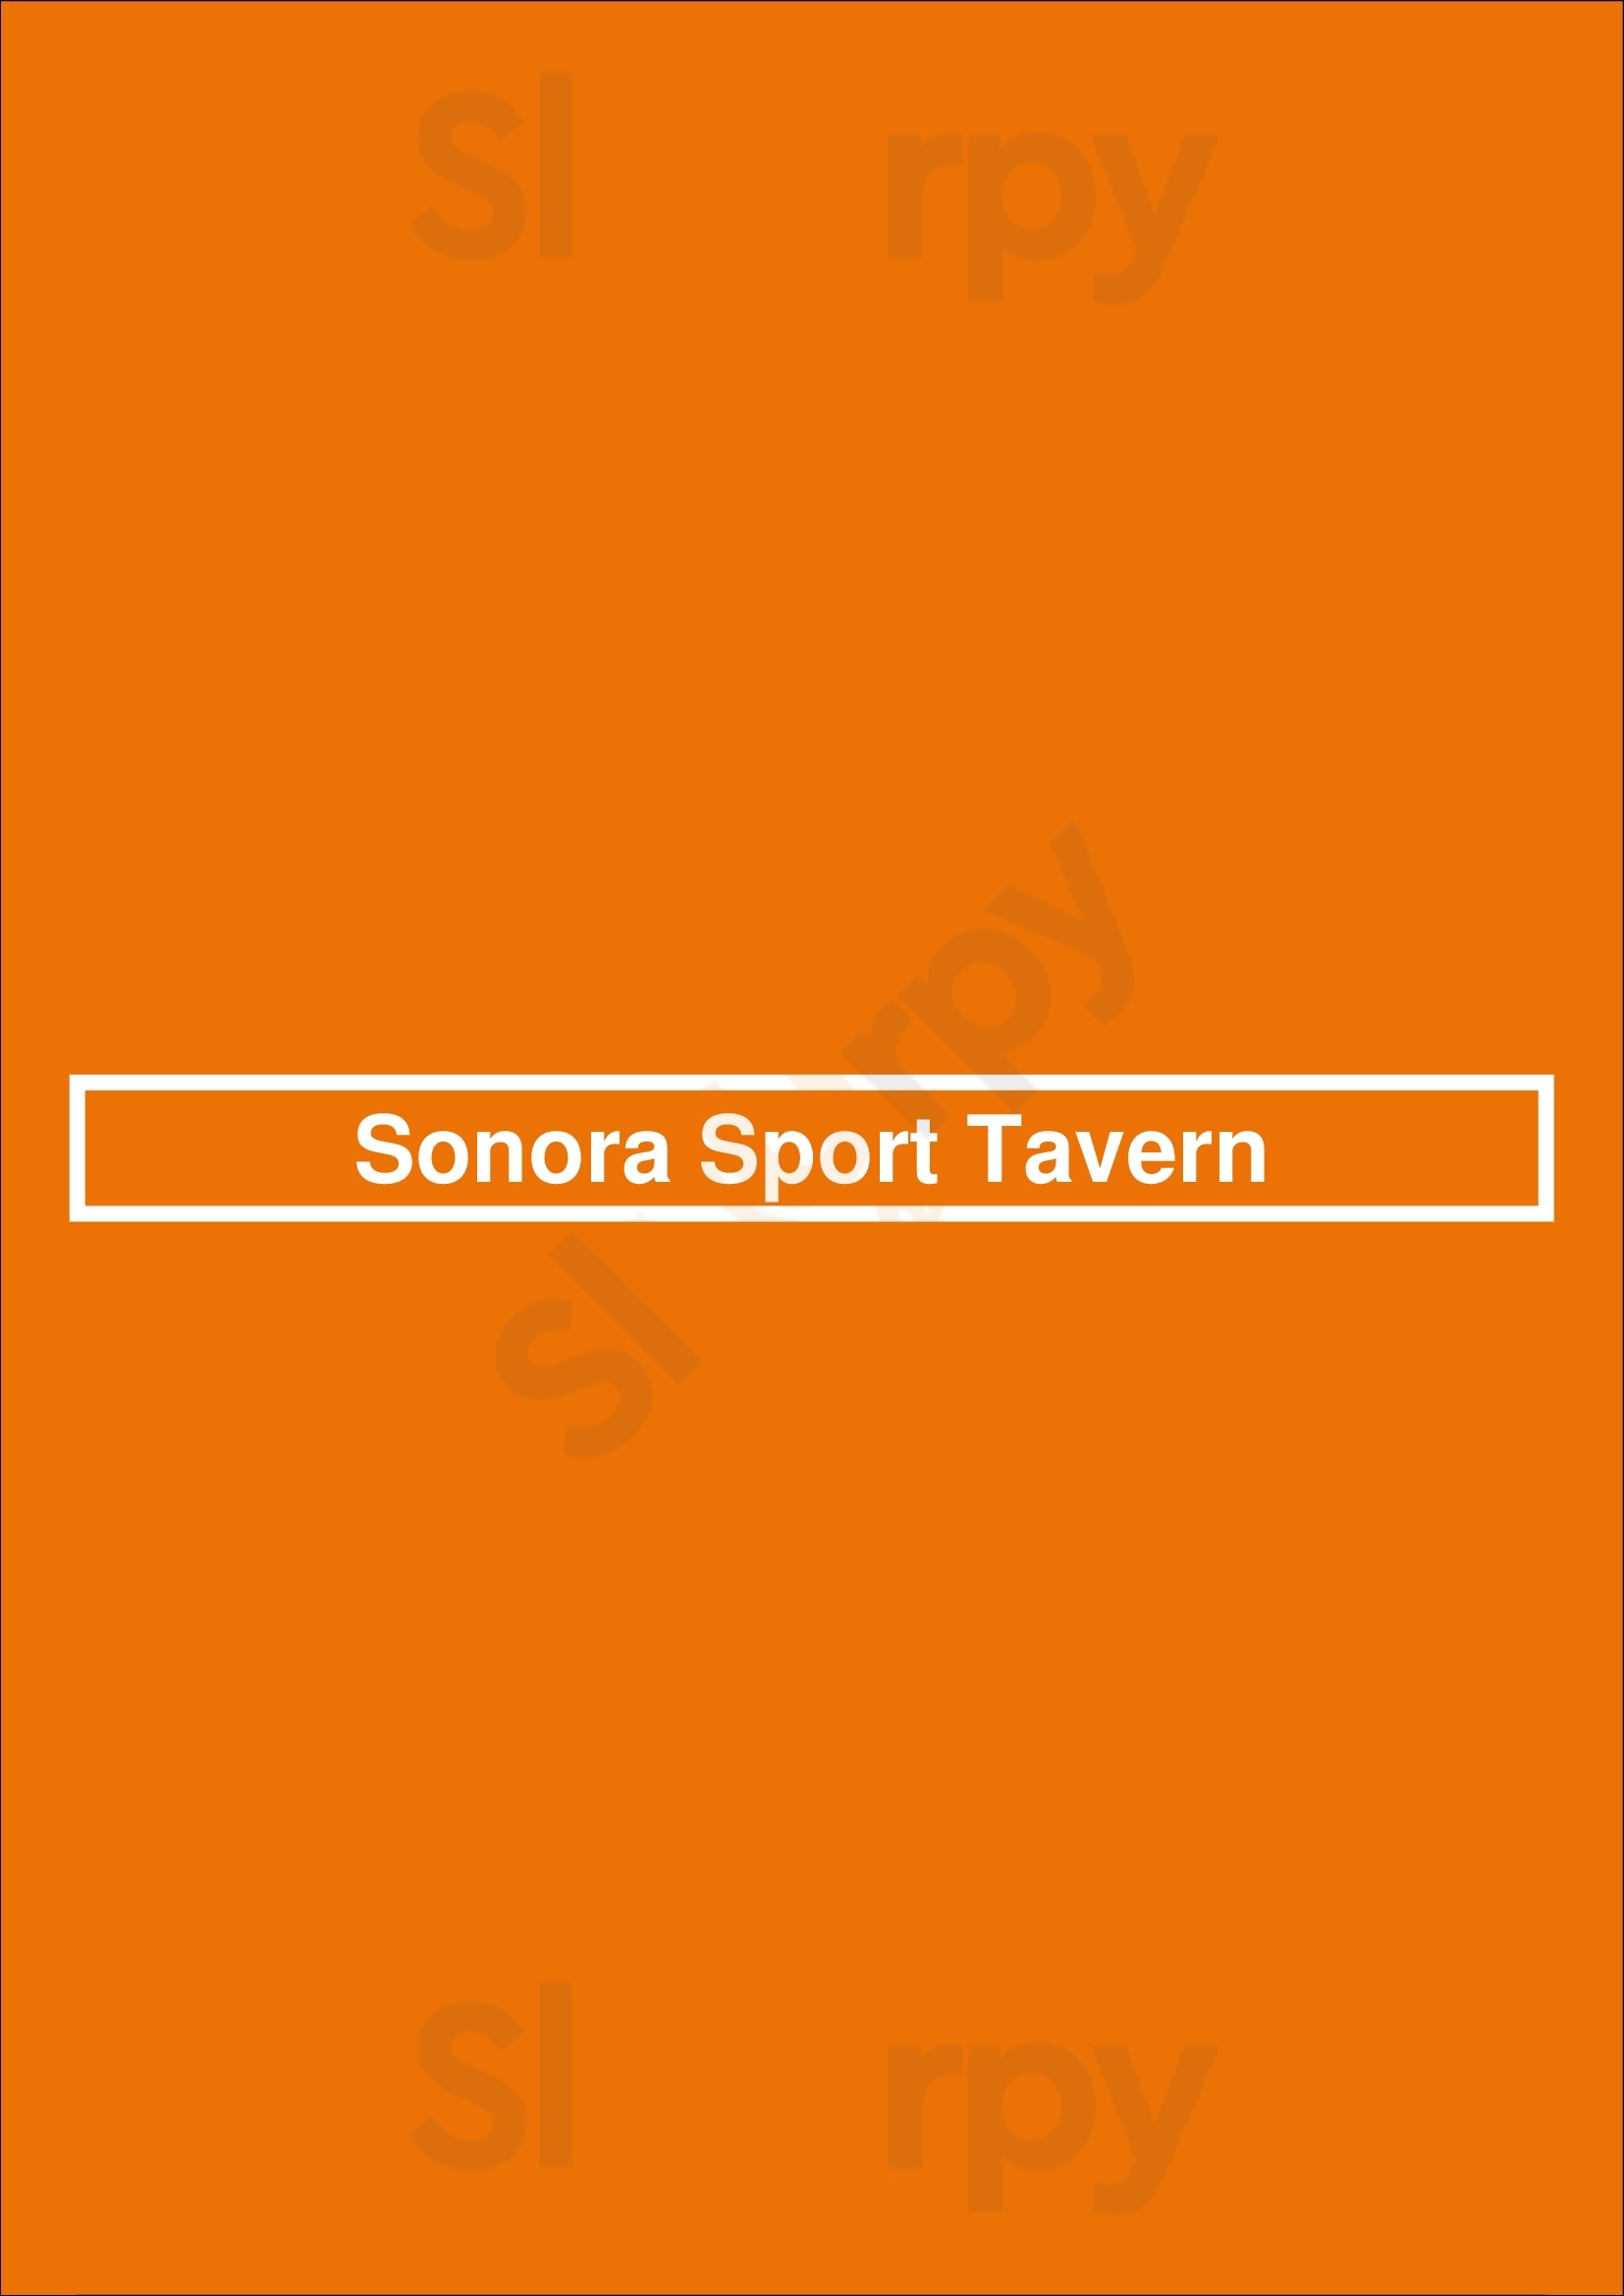 Sonora Sport Tavern Barcelona Menu - 1